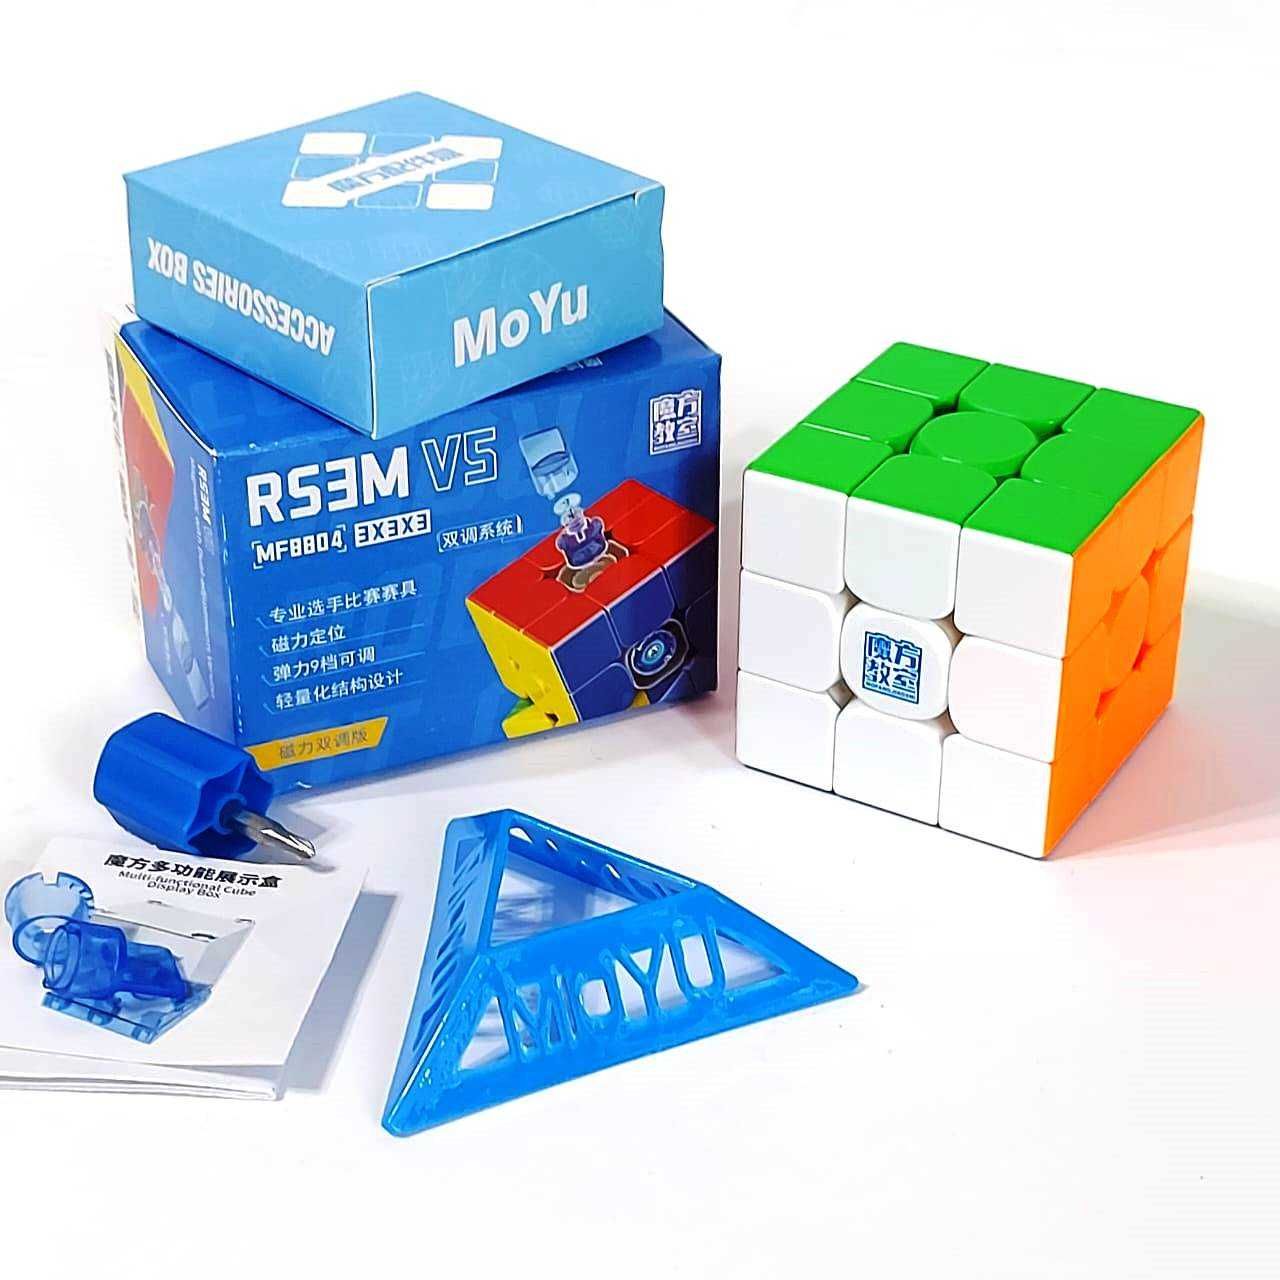 Кубик Рубика MoYu RS3 M V5 (Dual Adjustment) 3x3 51595